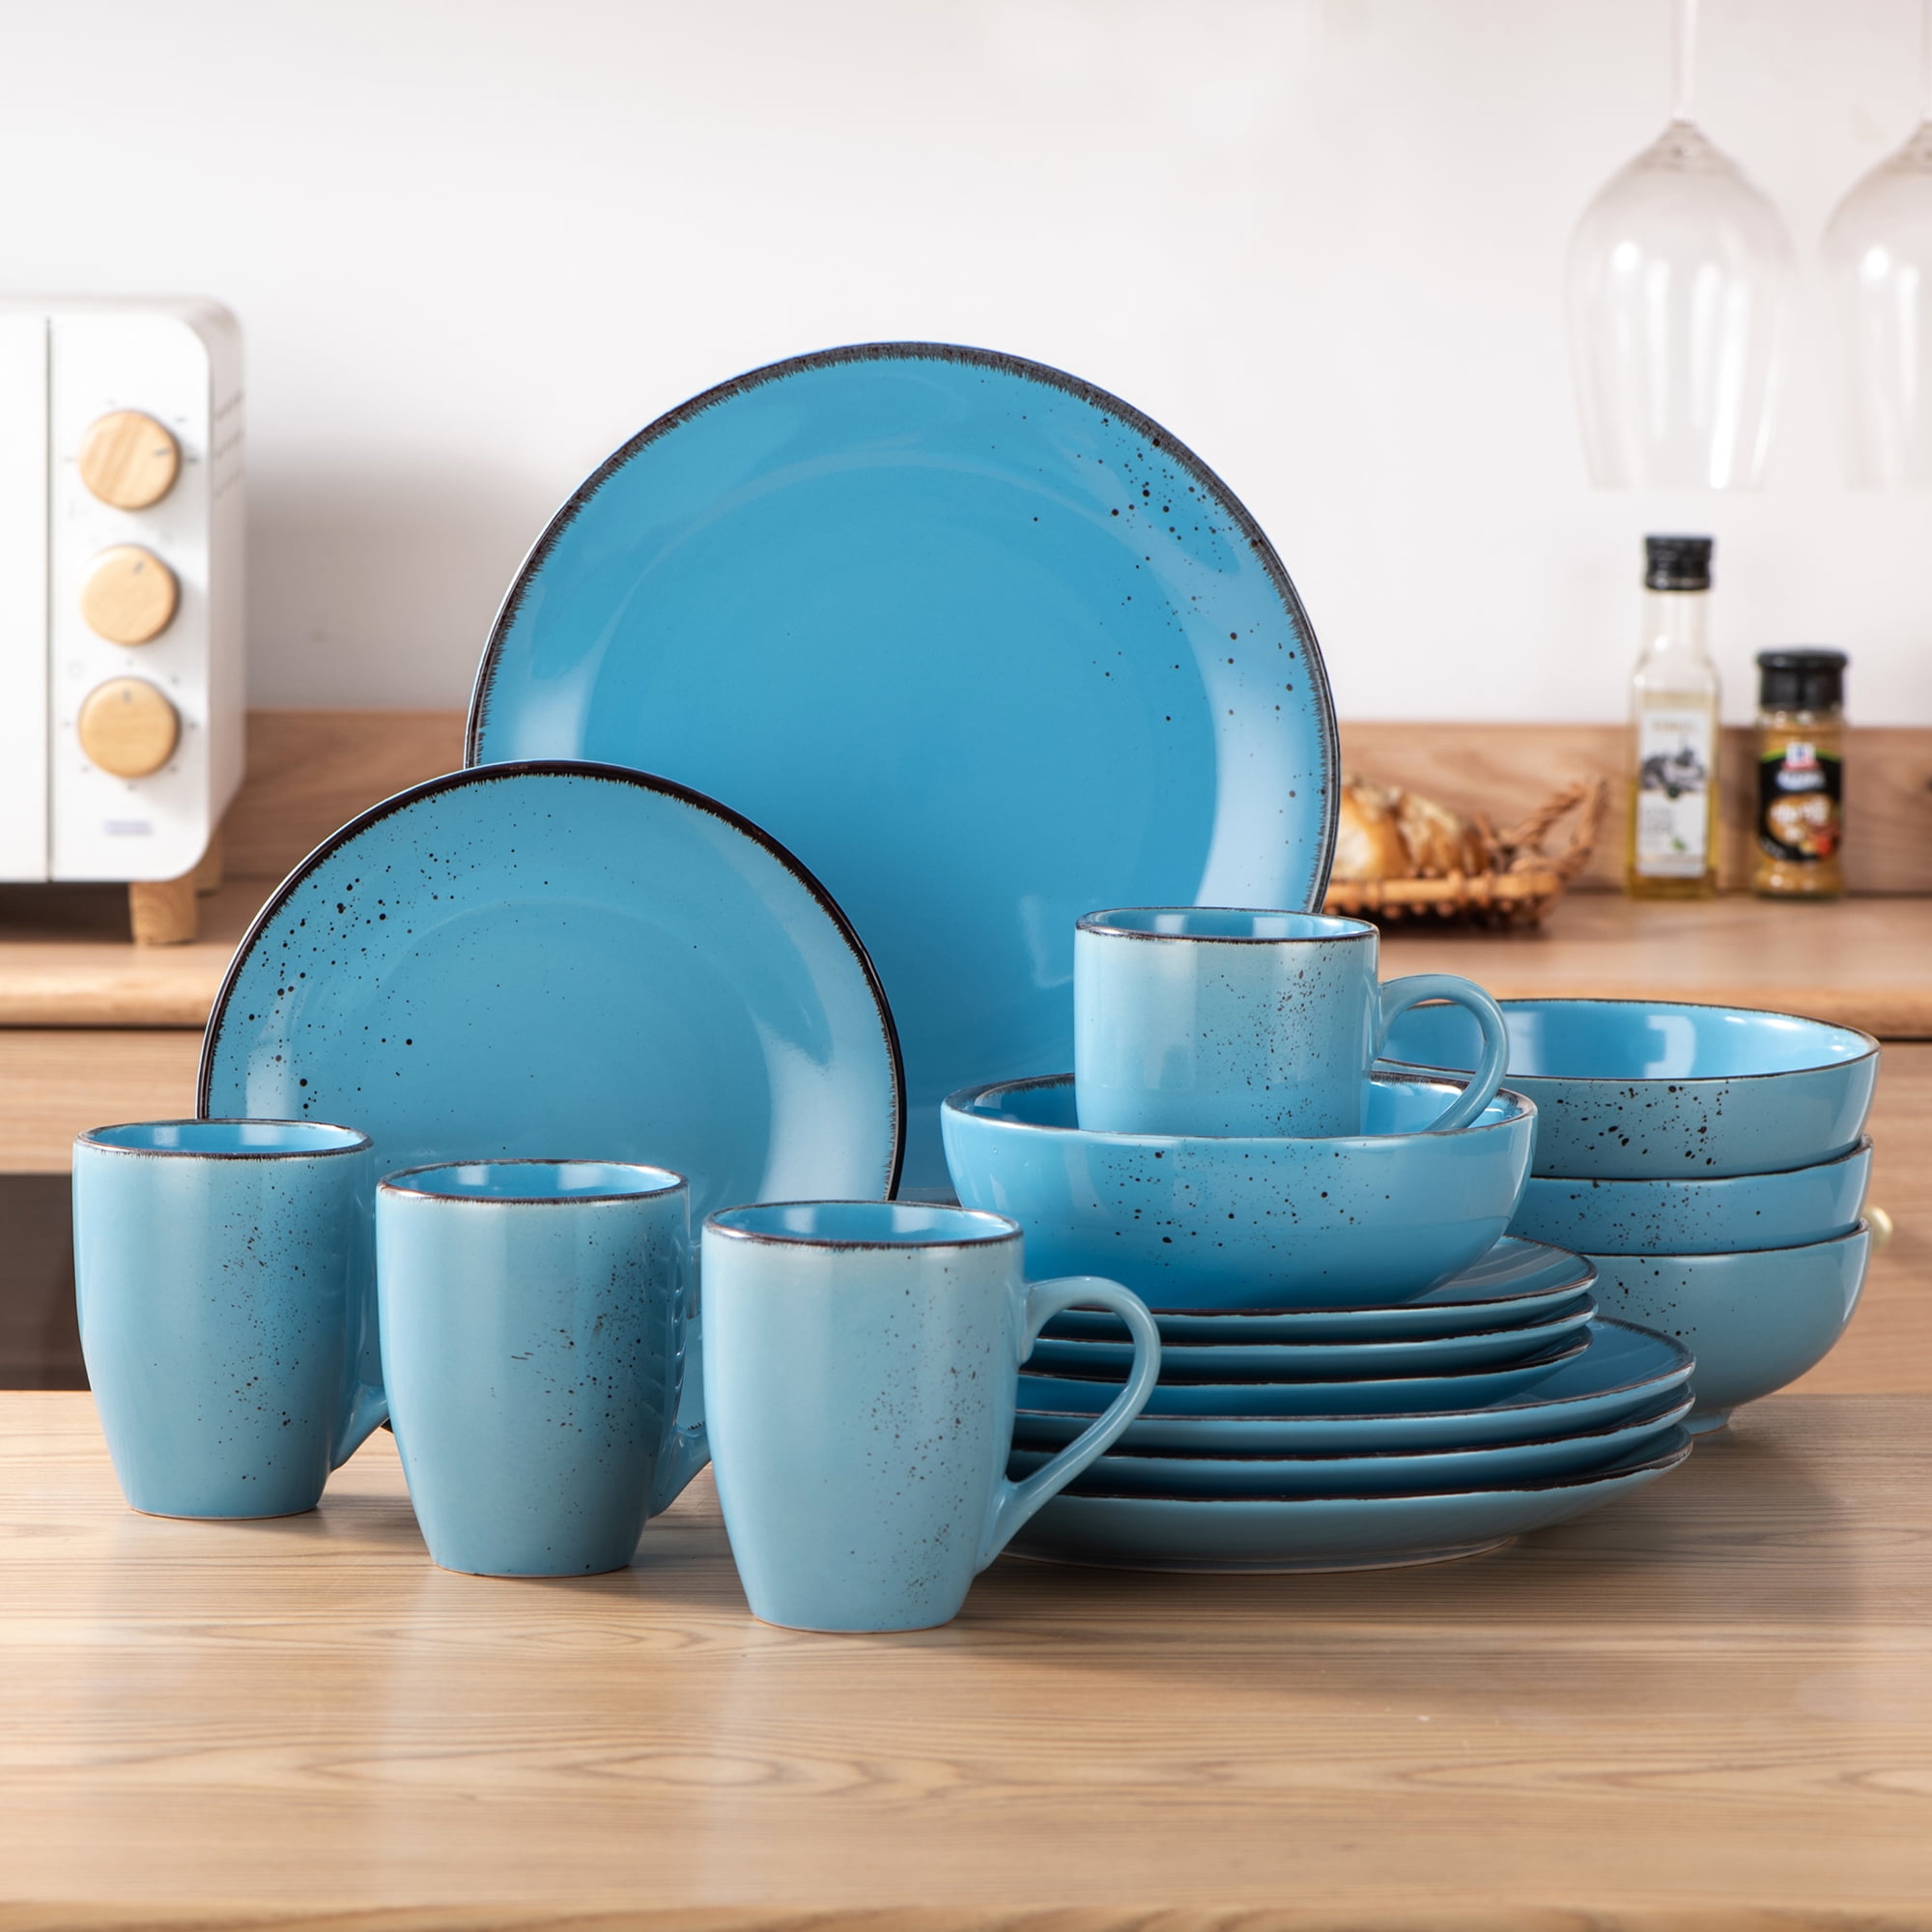 Details about   vancasso Navia Dinnerware Set 16-Piece Stoneware Plates Bowls Mugs Service for 4 